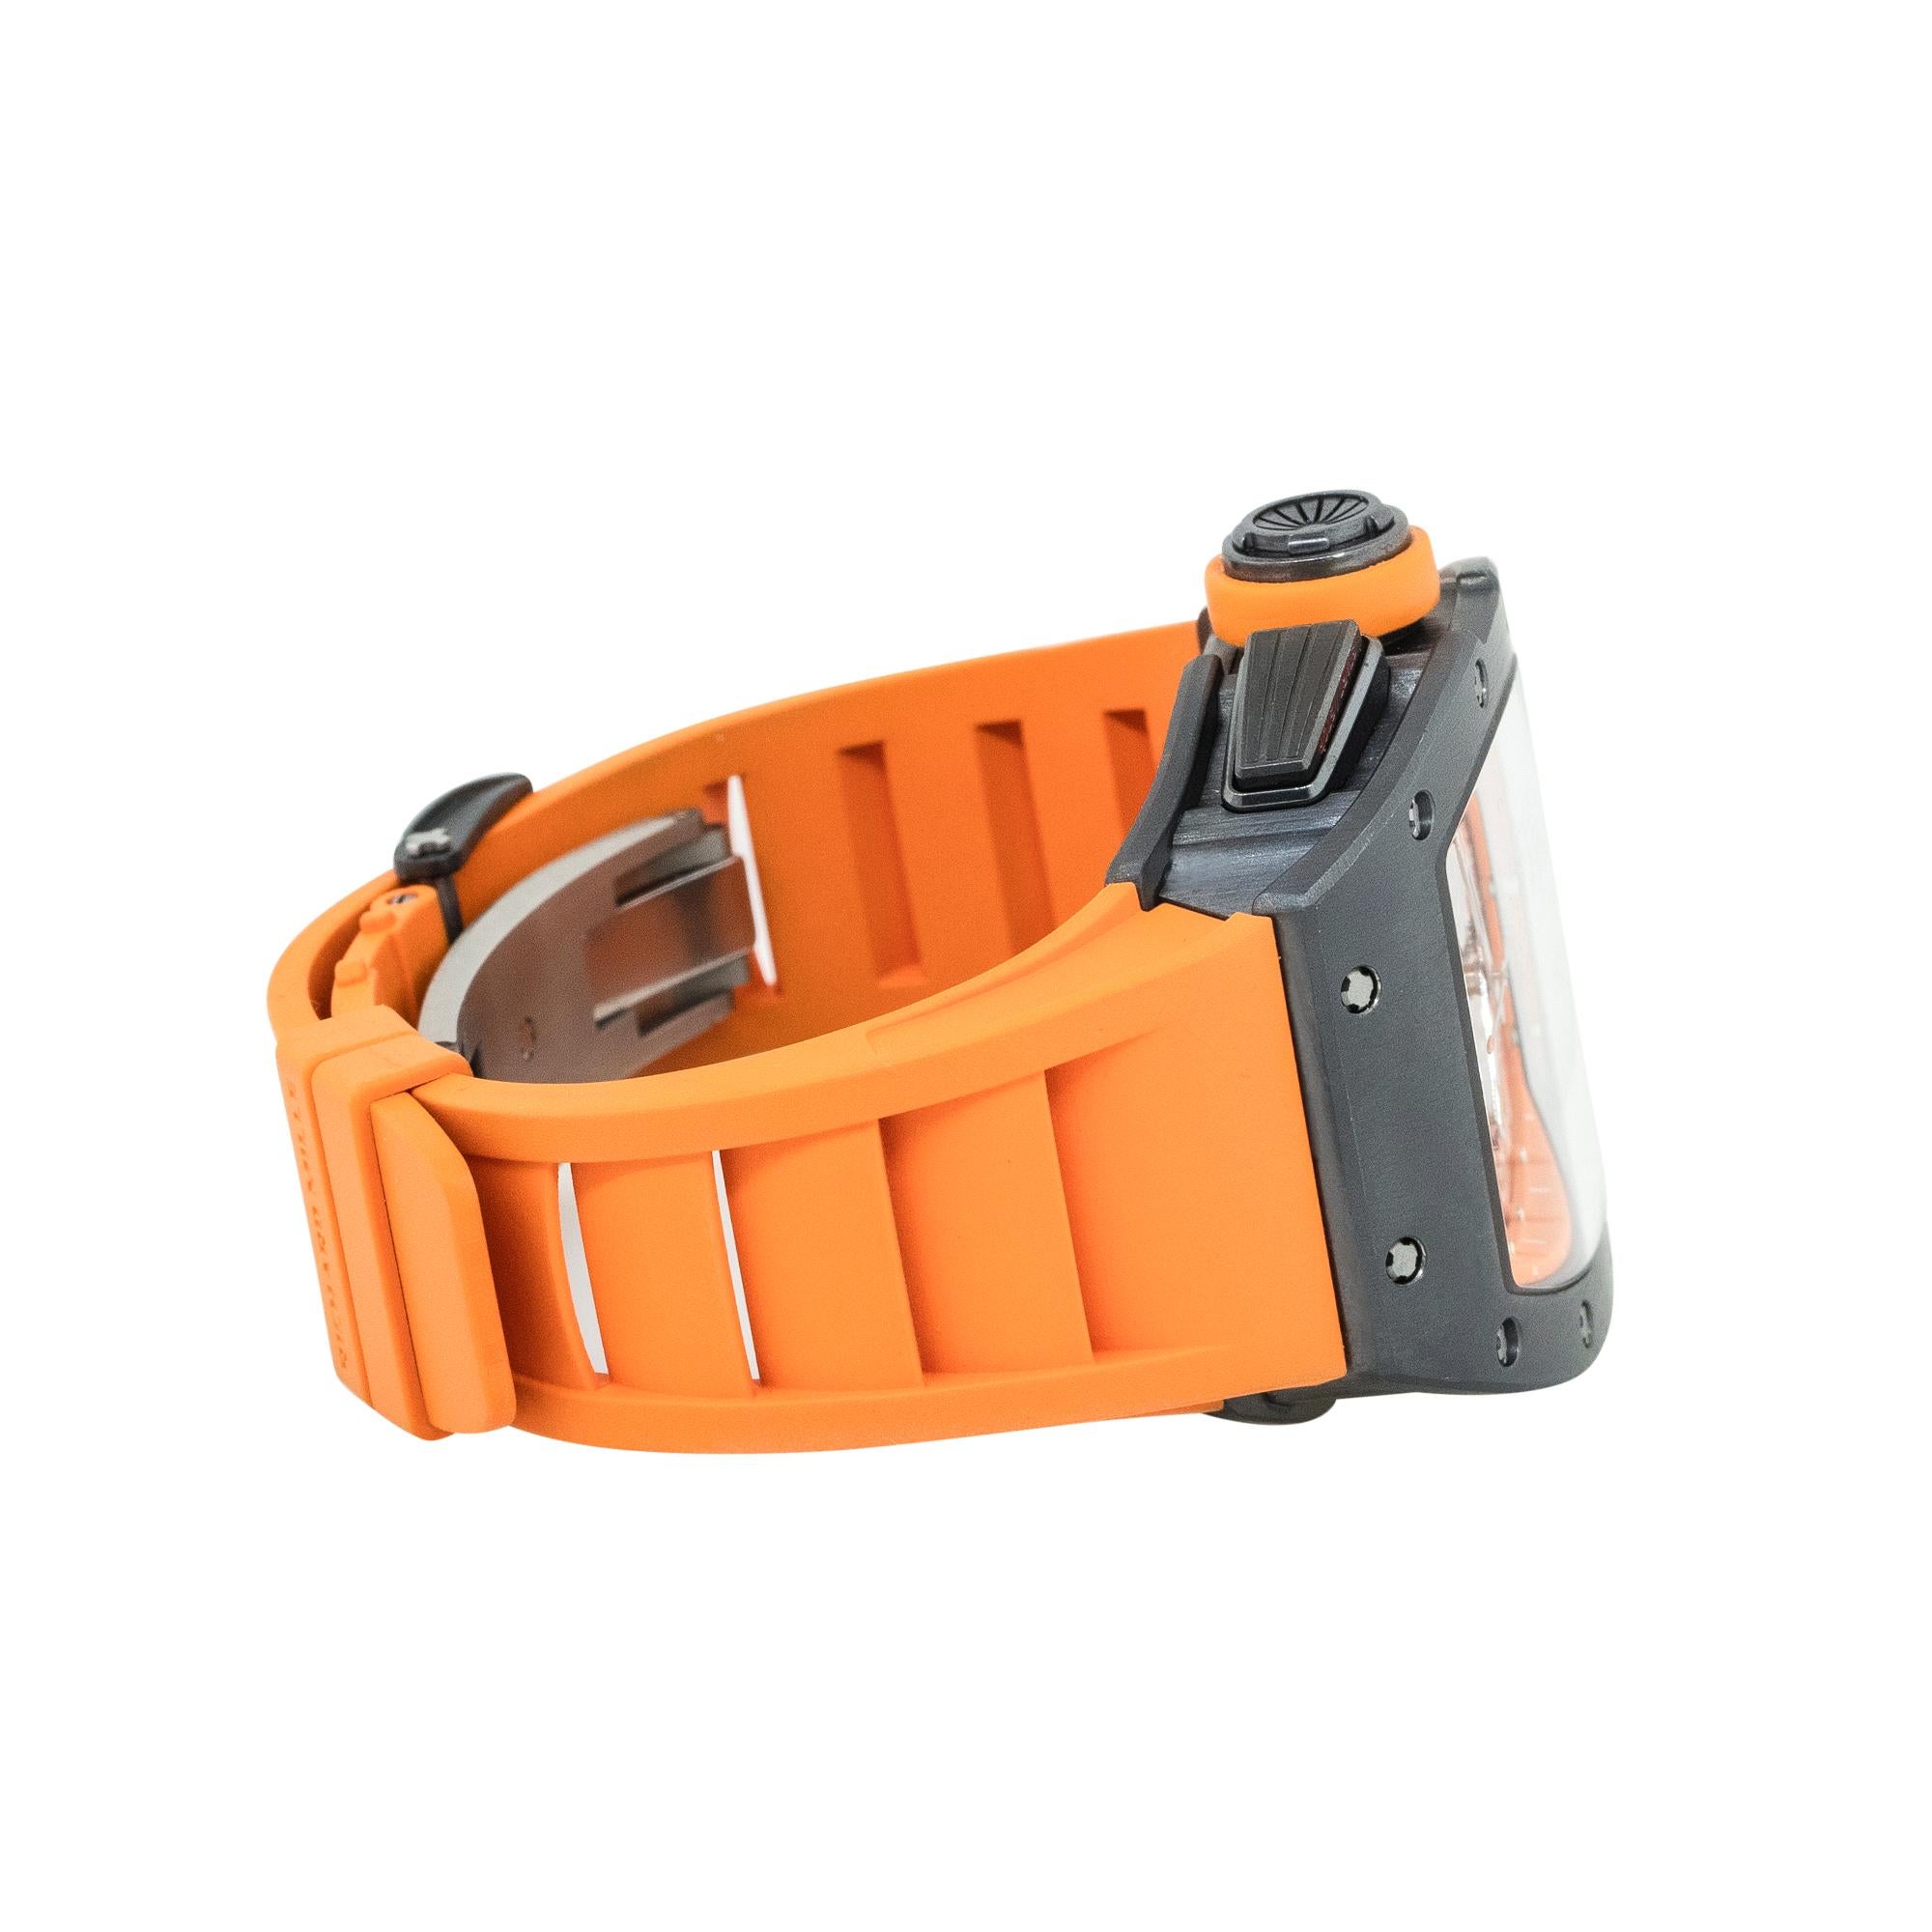 Richard Mille RM011-FM Titanium Orange Storm Watch In Excellent Condition For Sale In Boca Raton, FL